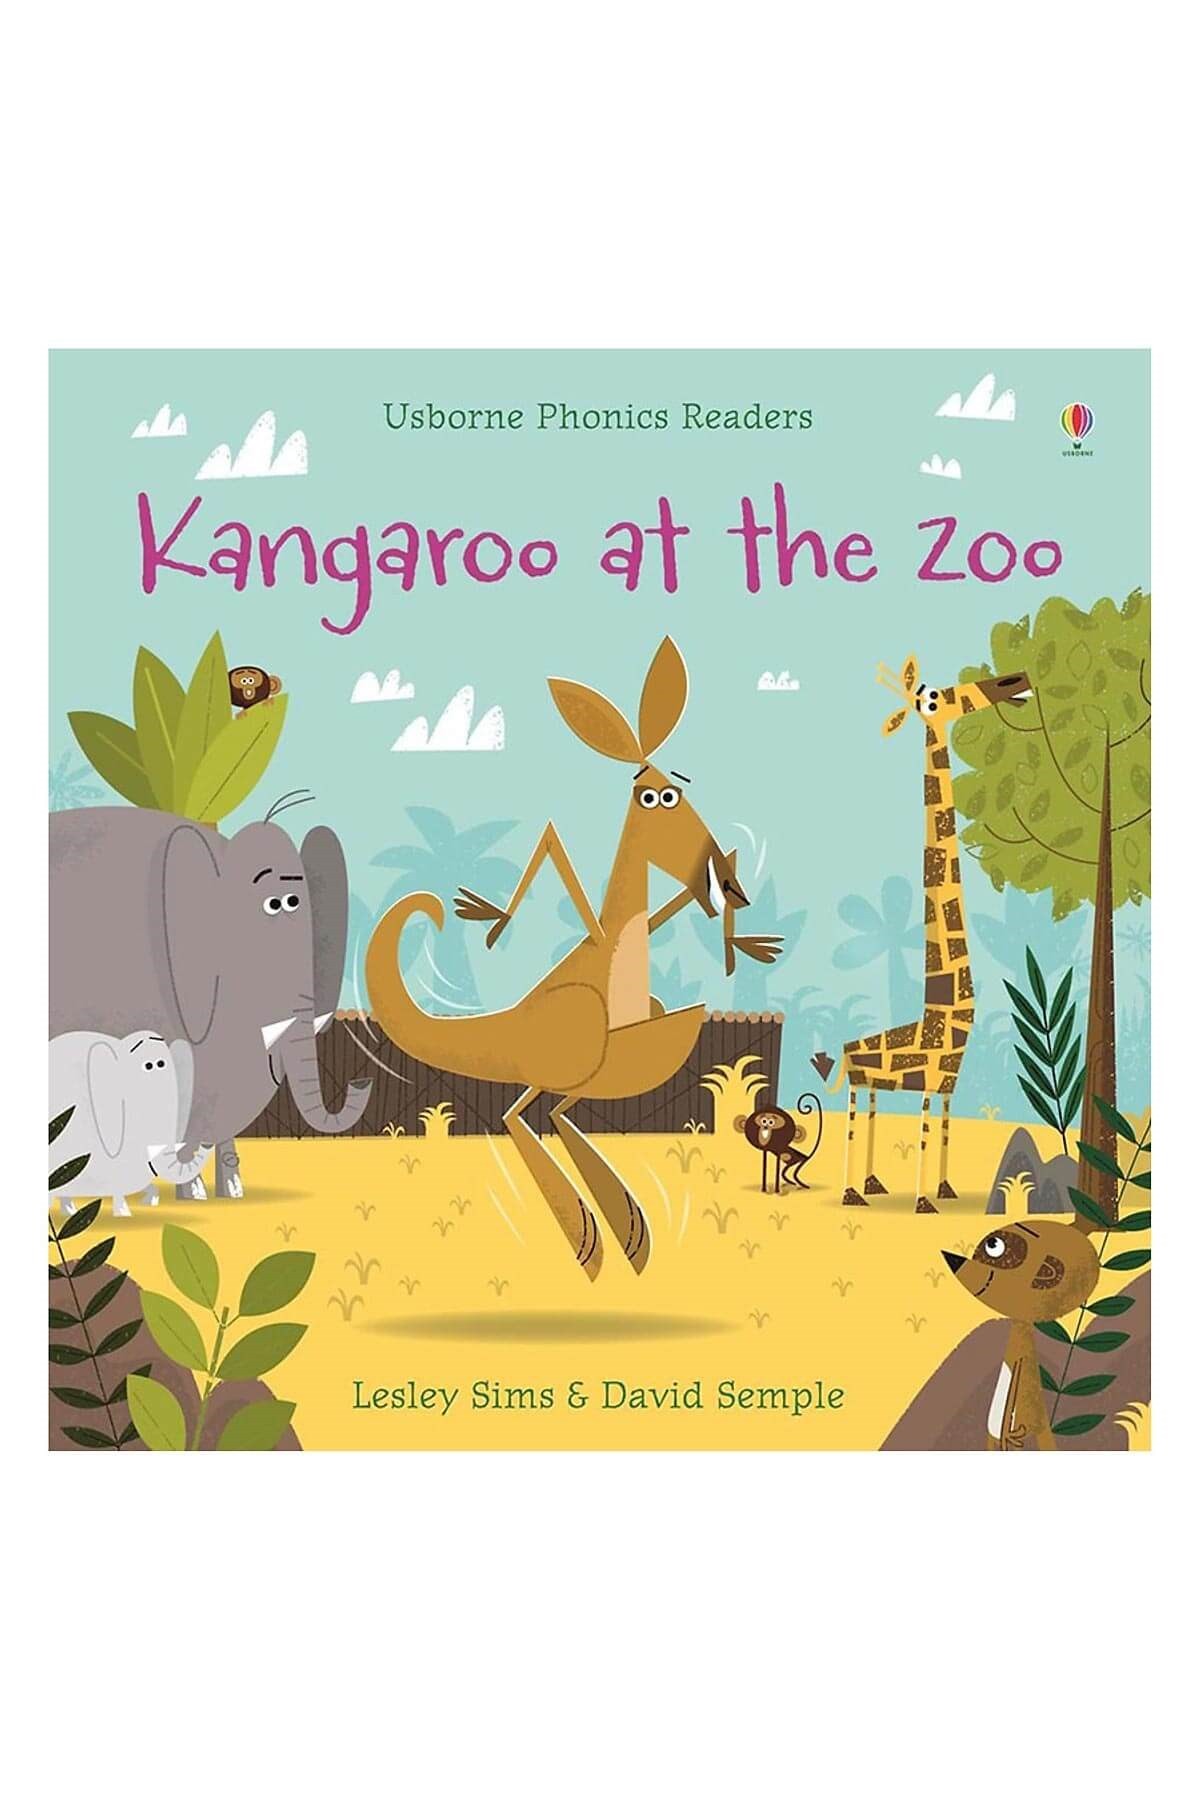 The Usborne Kangaroo at the Zoo